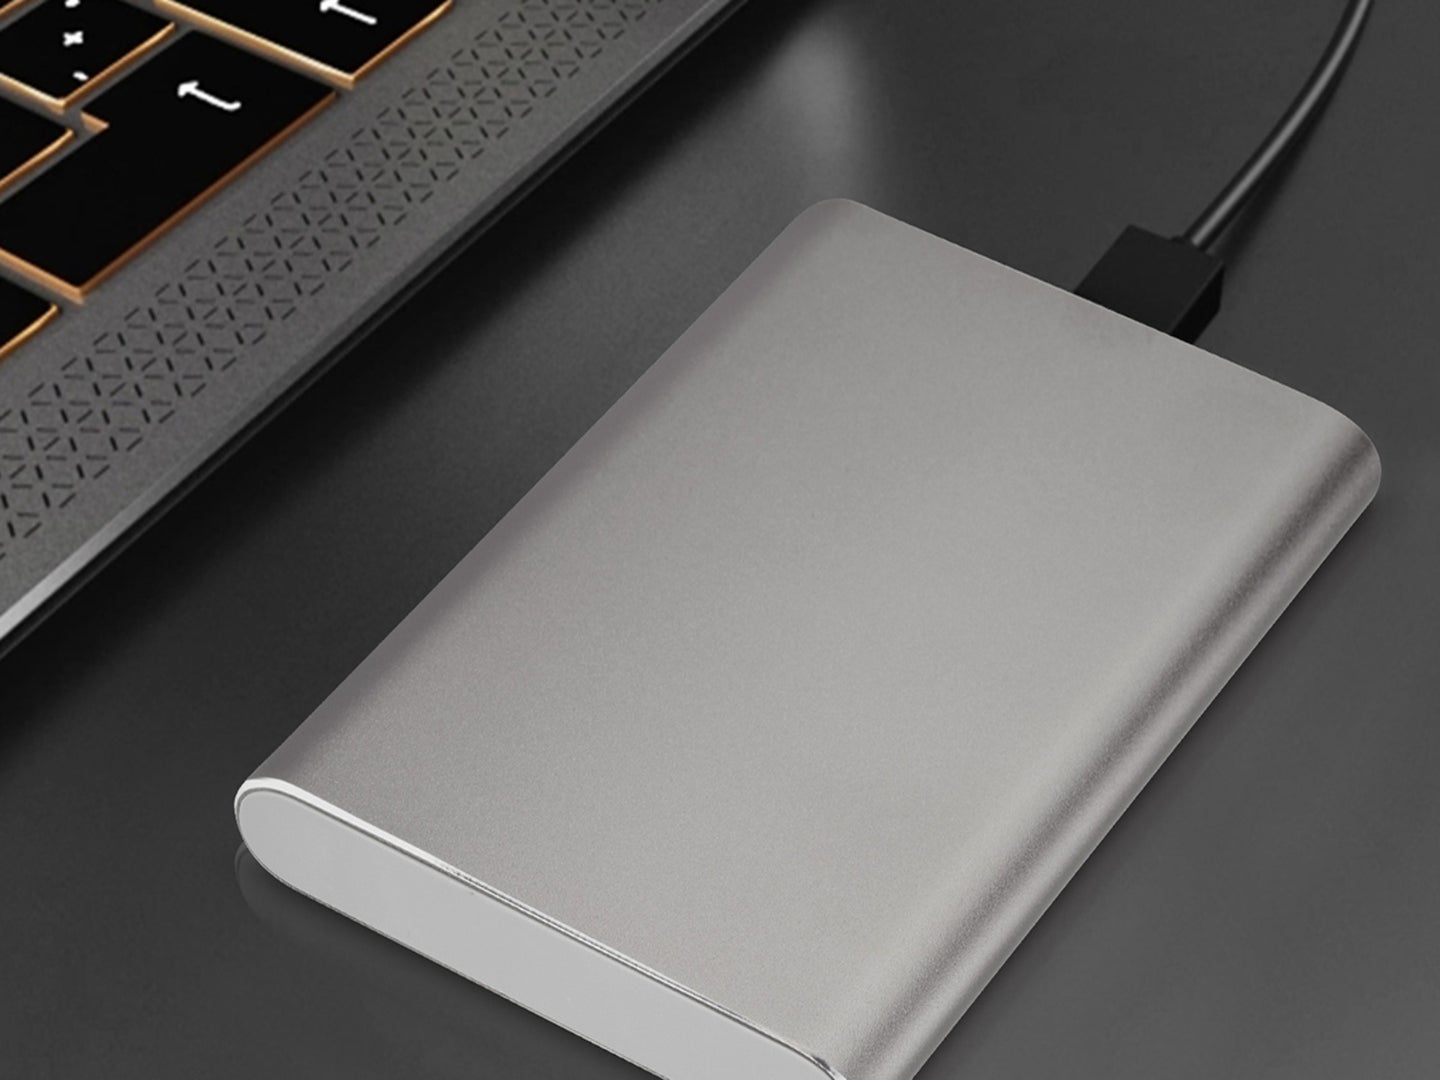 A silver hard drive on a desk